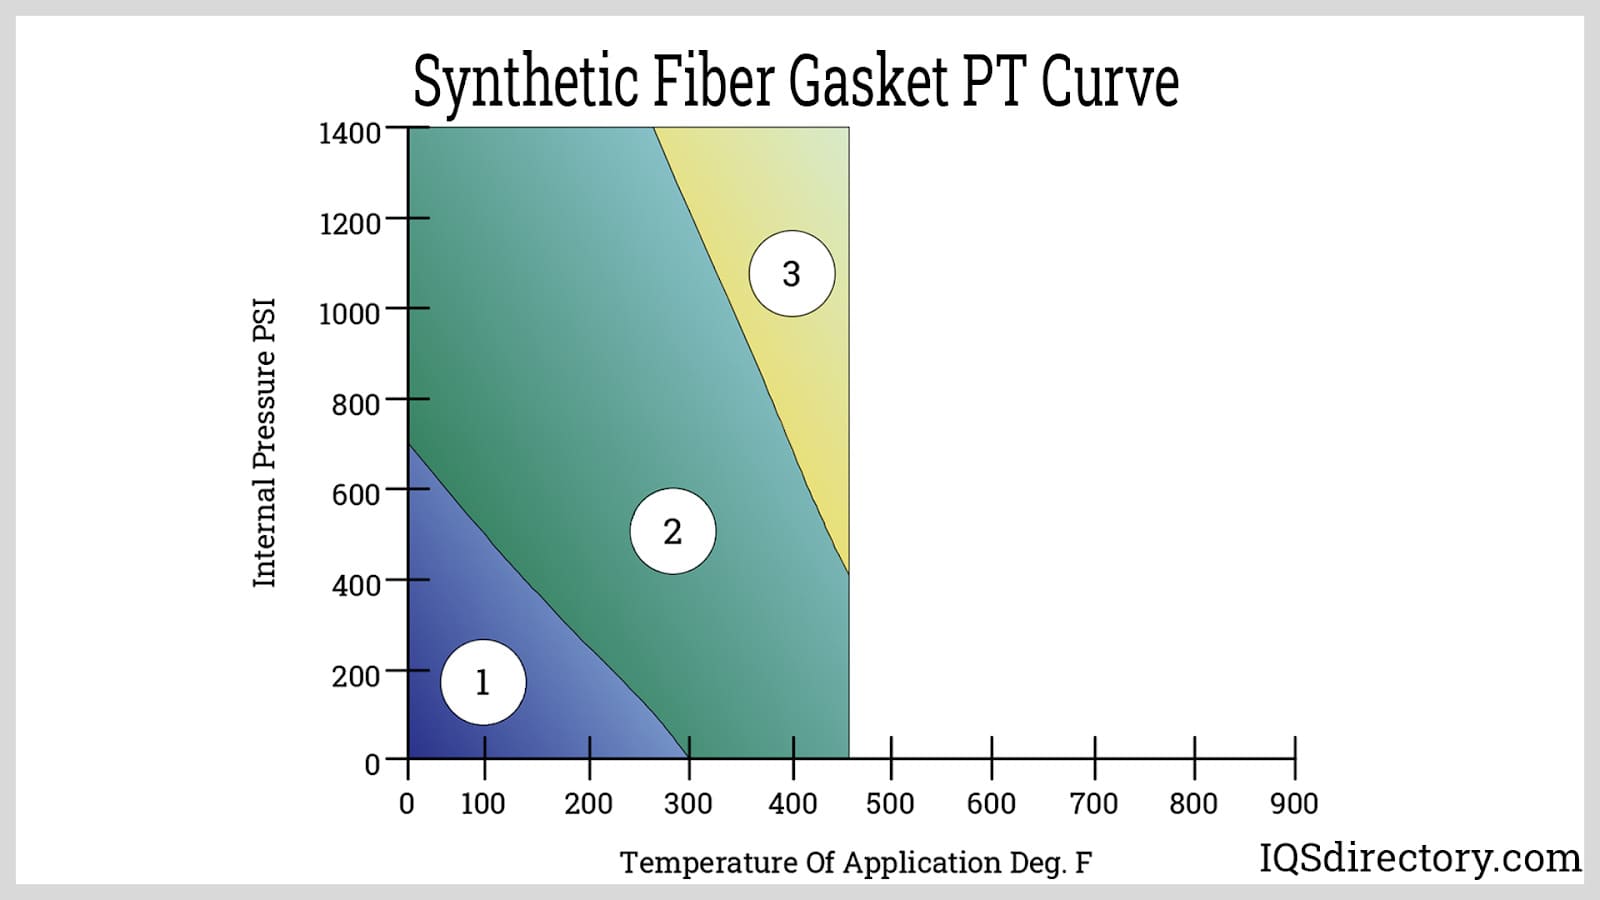 Synthetic Fiber Gasket PT Curve